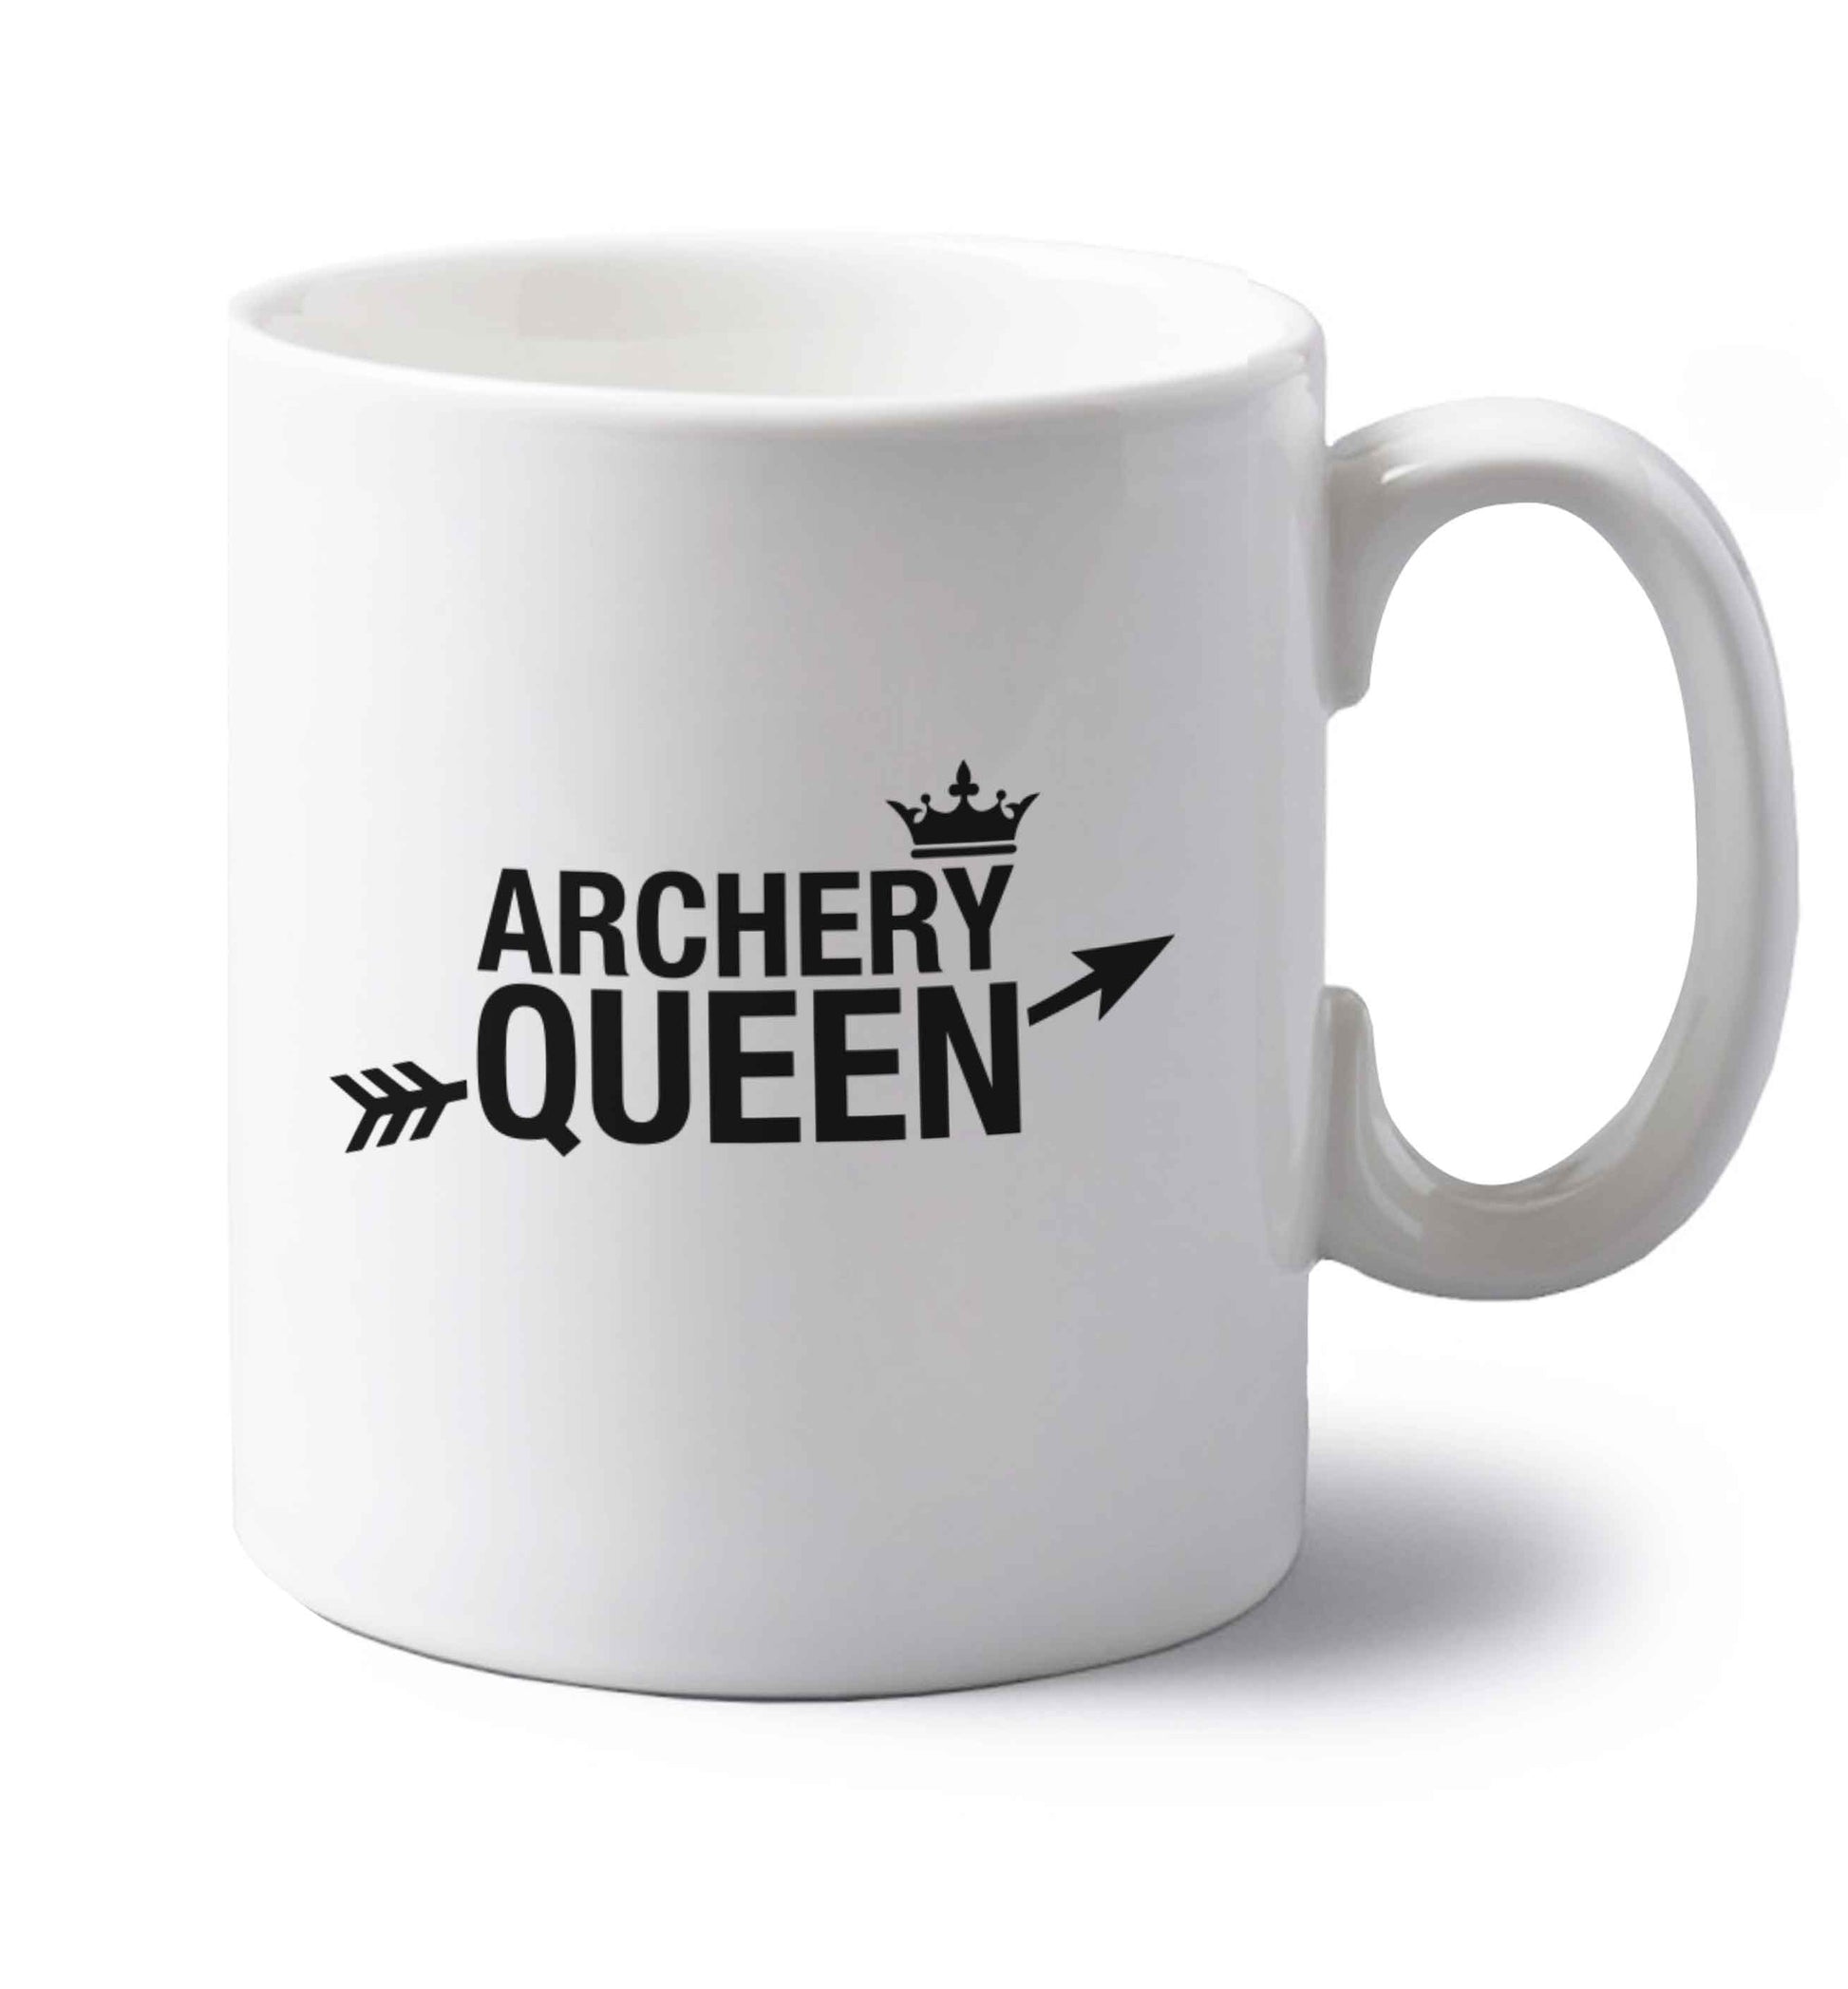 Archery queen left handed white ceramic mug 